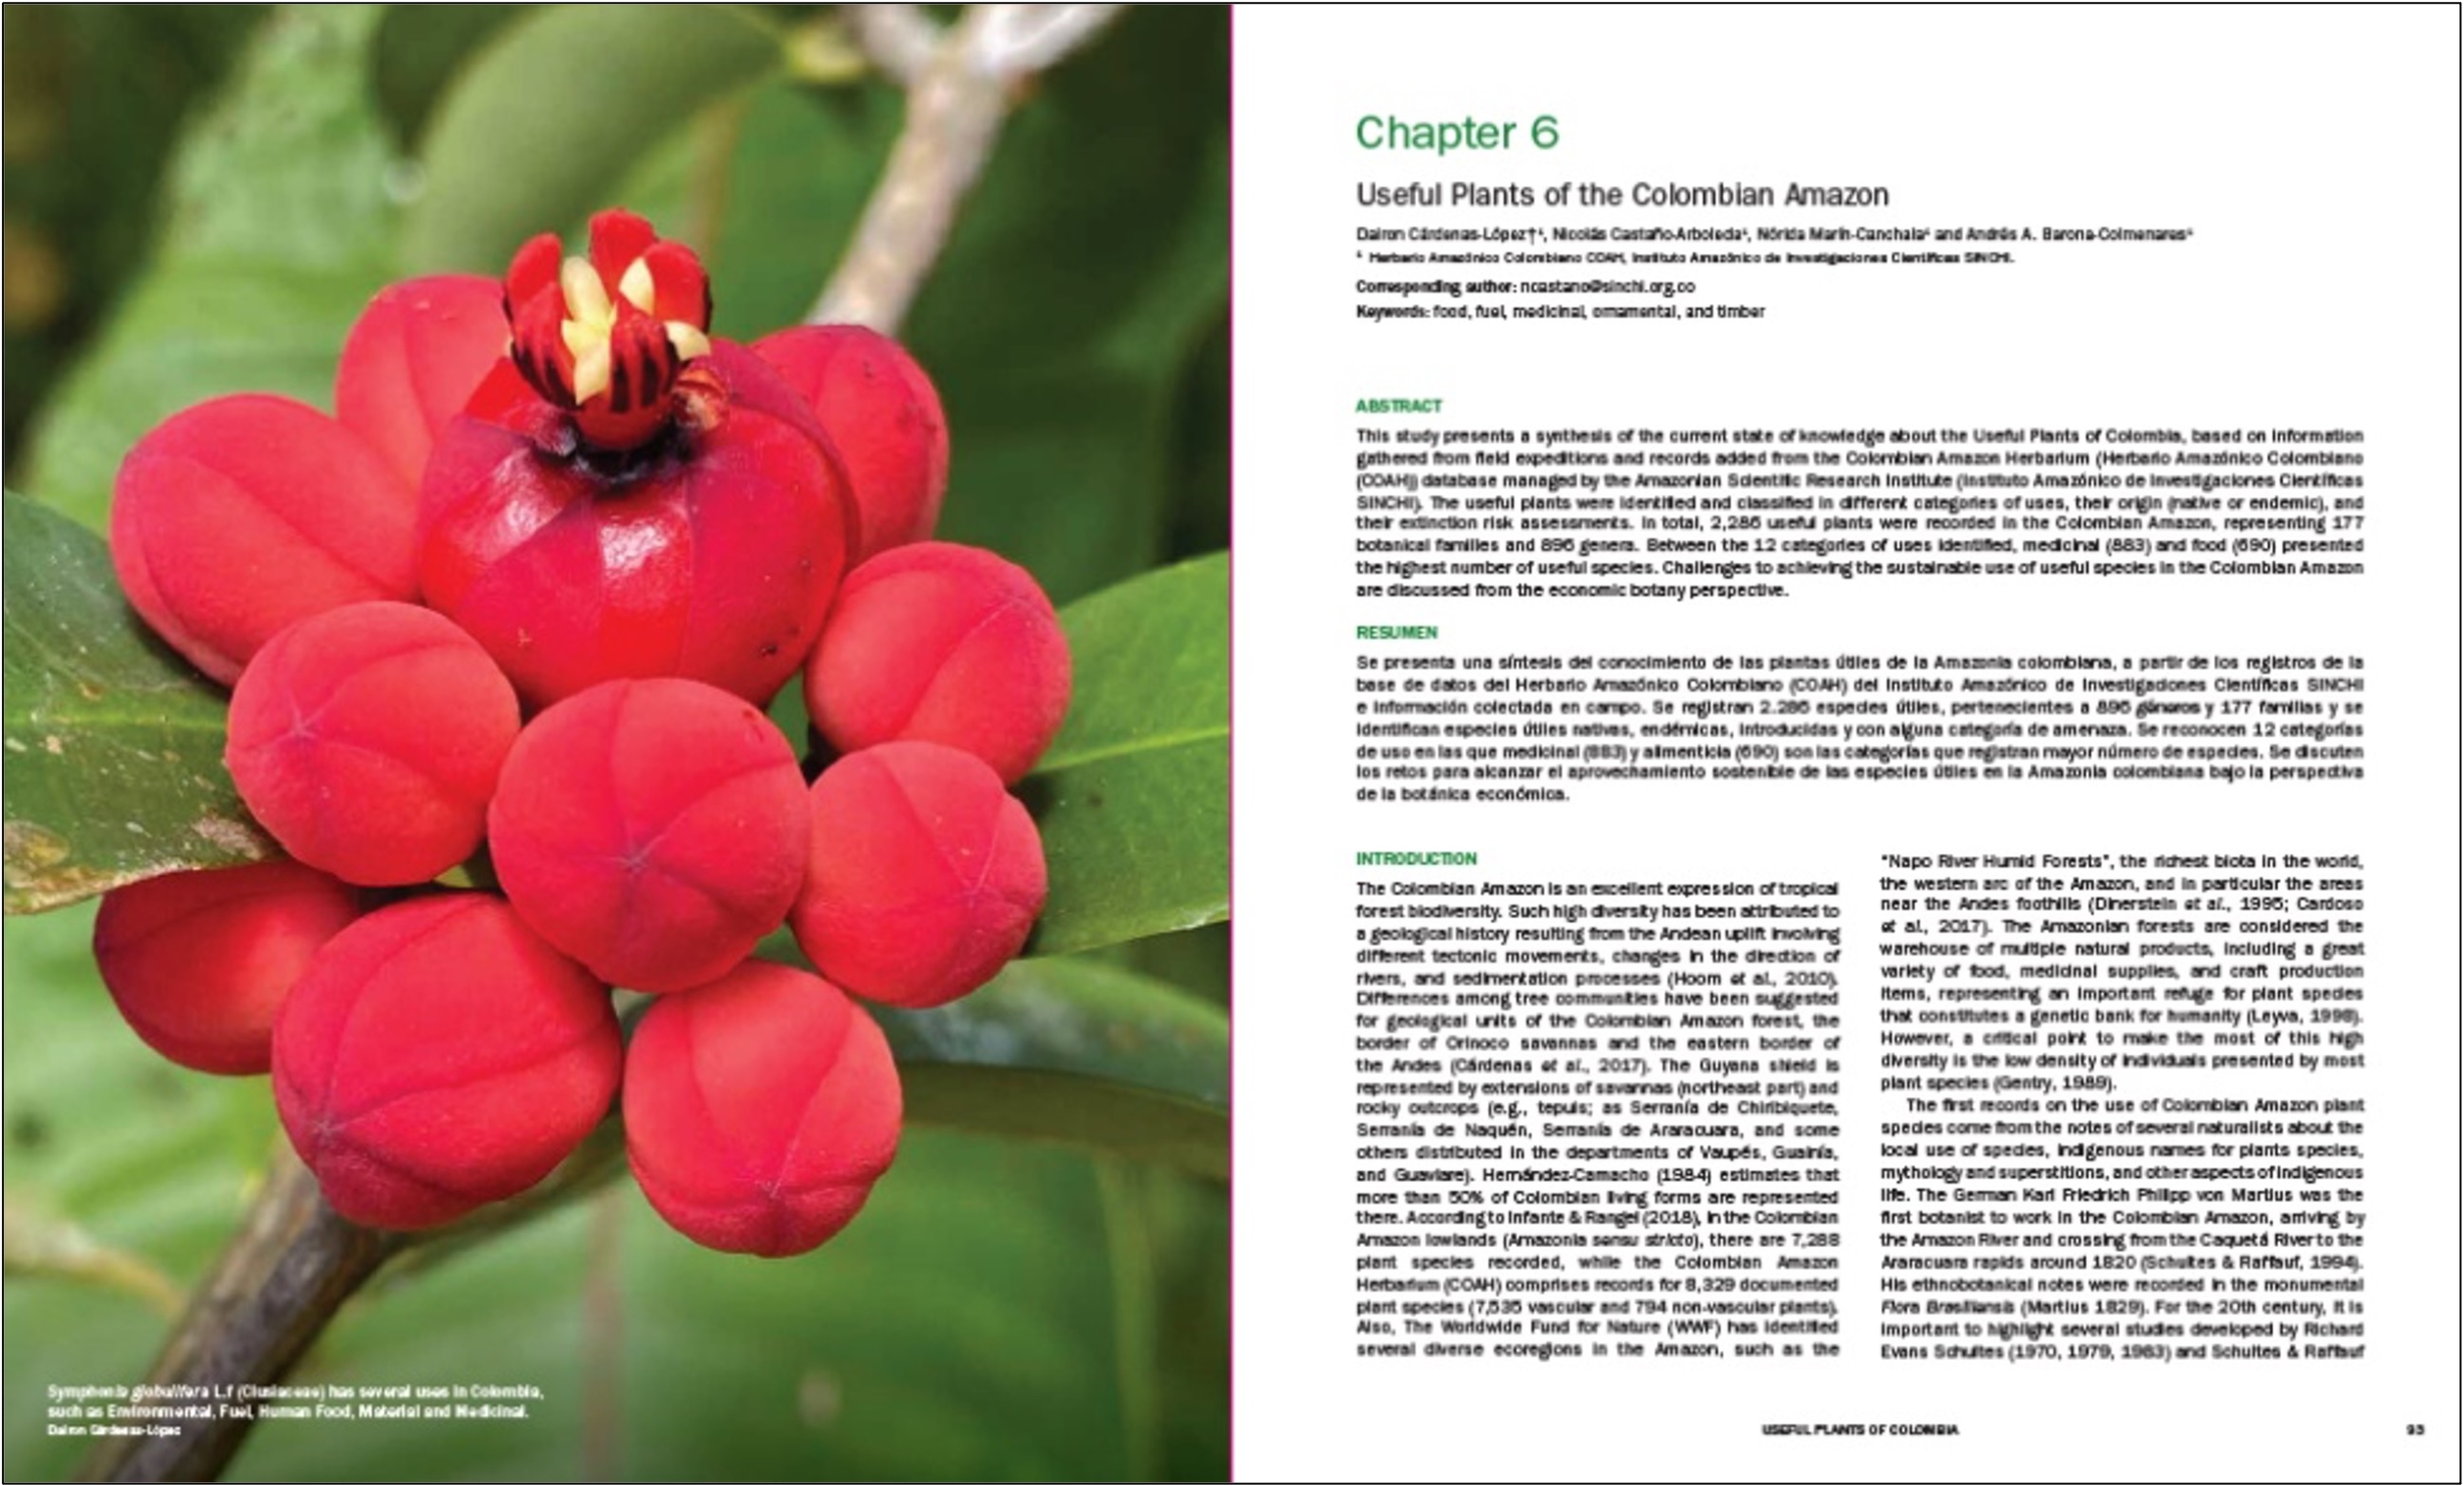 Figura 4. Portada Capitulo 6. Useful Plants of the Colombian Amazon en la publicación: Useful Plants and Fungi of Colombia (UPFC) - Kew Gardens